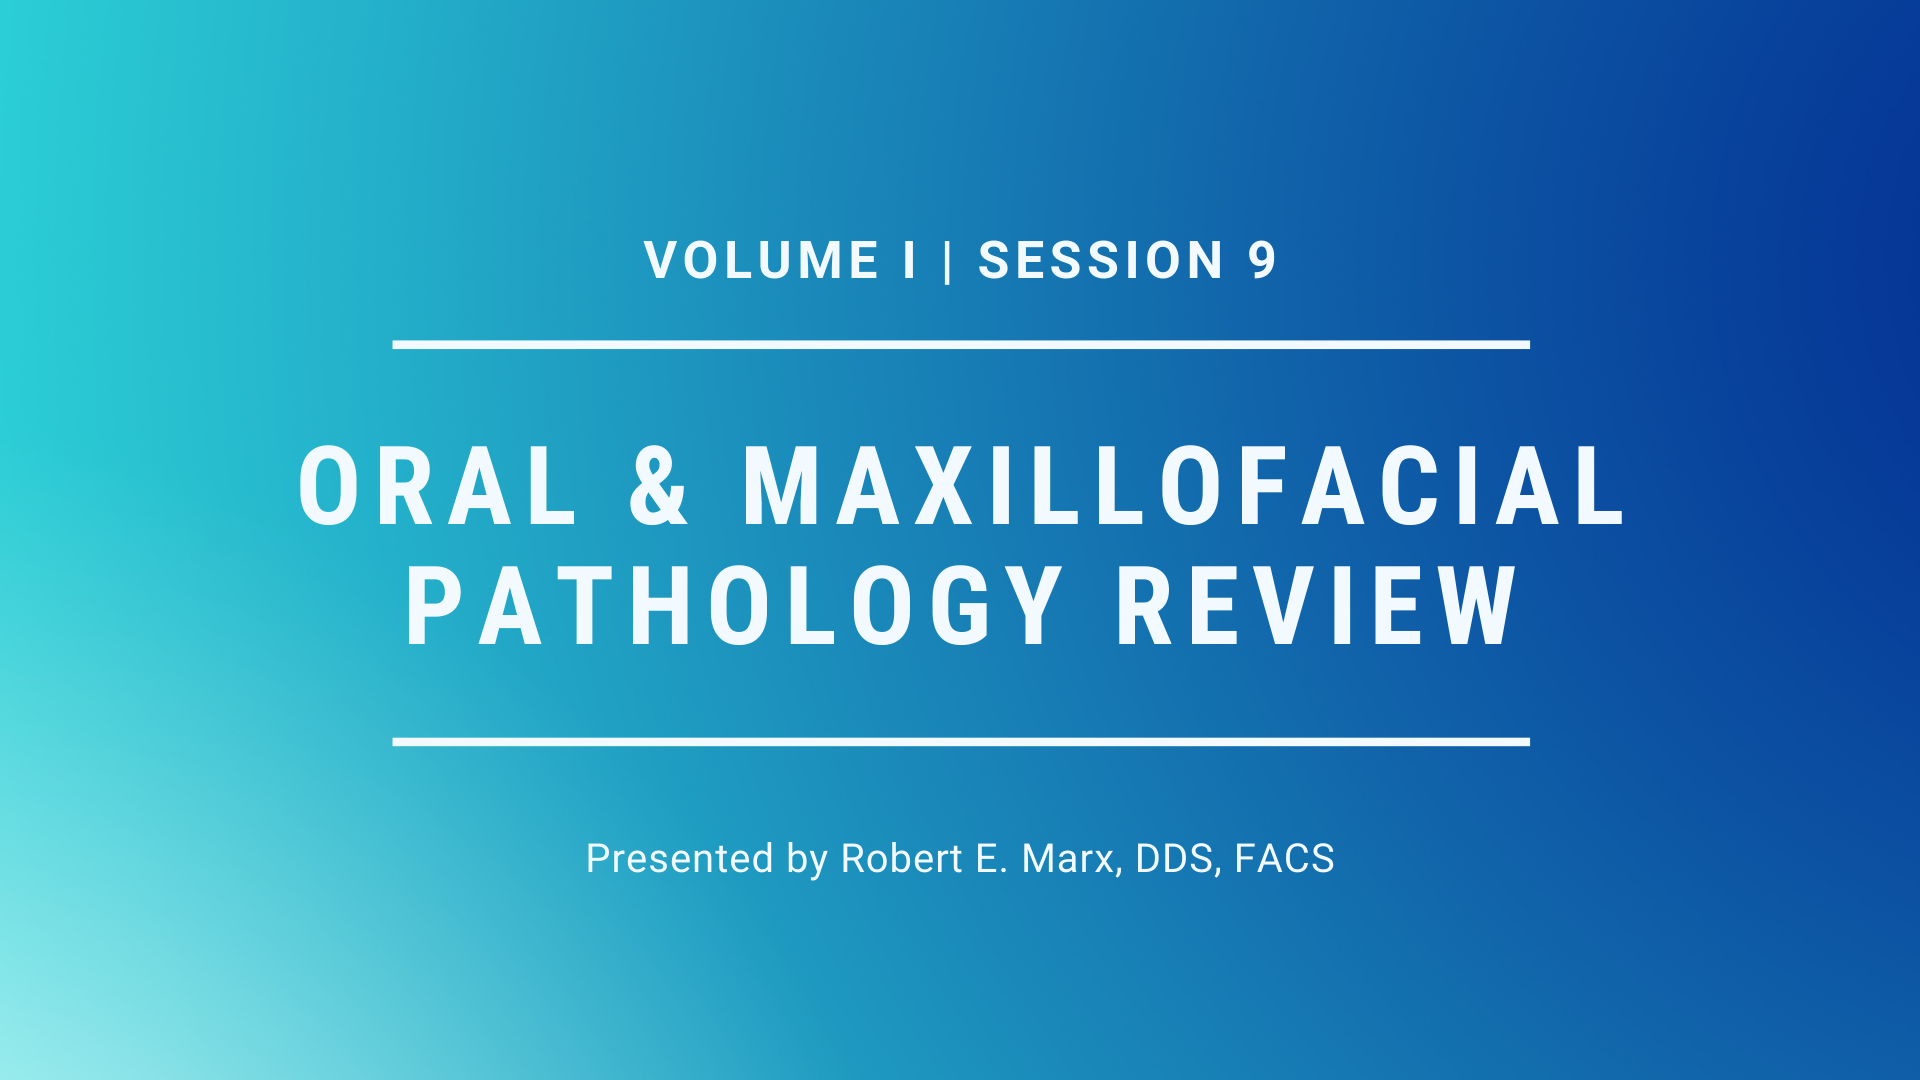 Oral & Maxillofacial Pathology Review – Volume I (OMFS) - Session 9